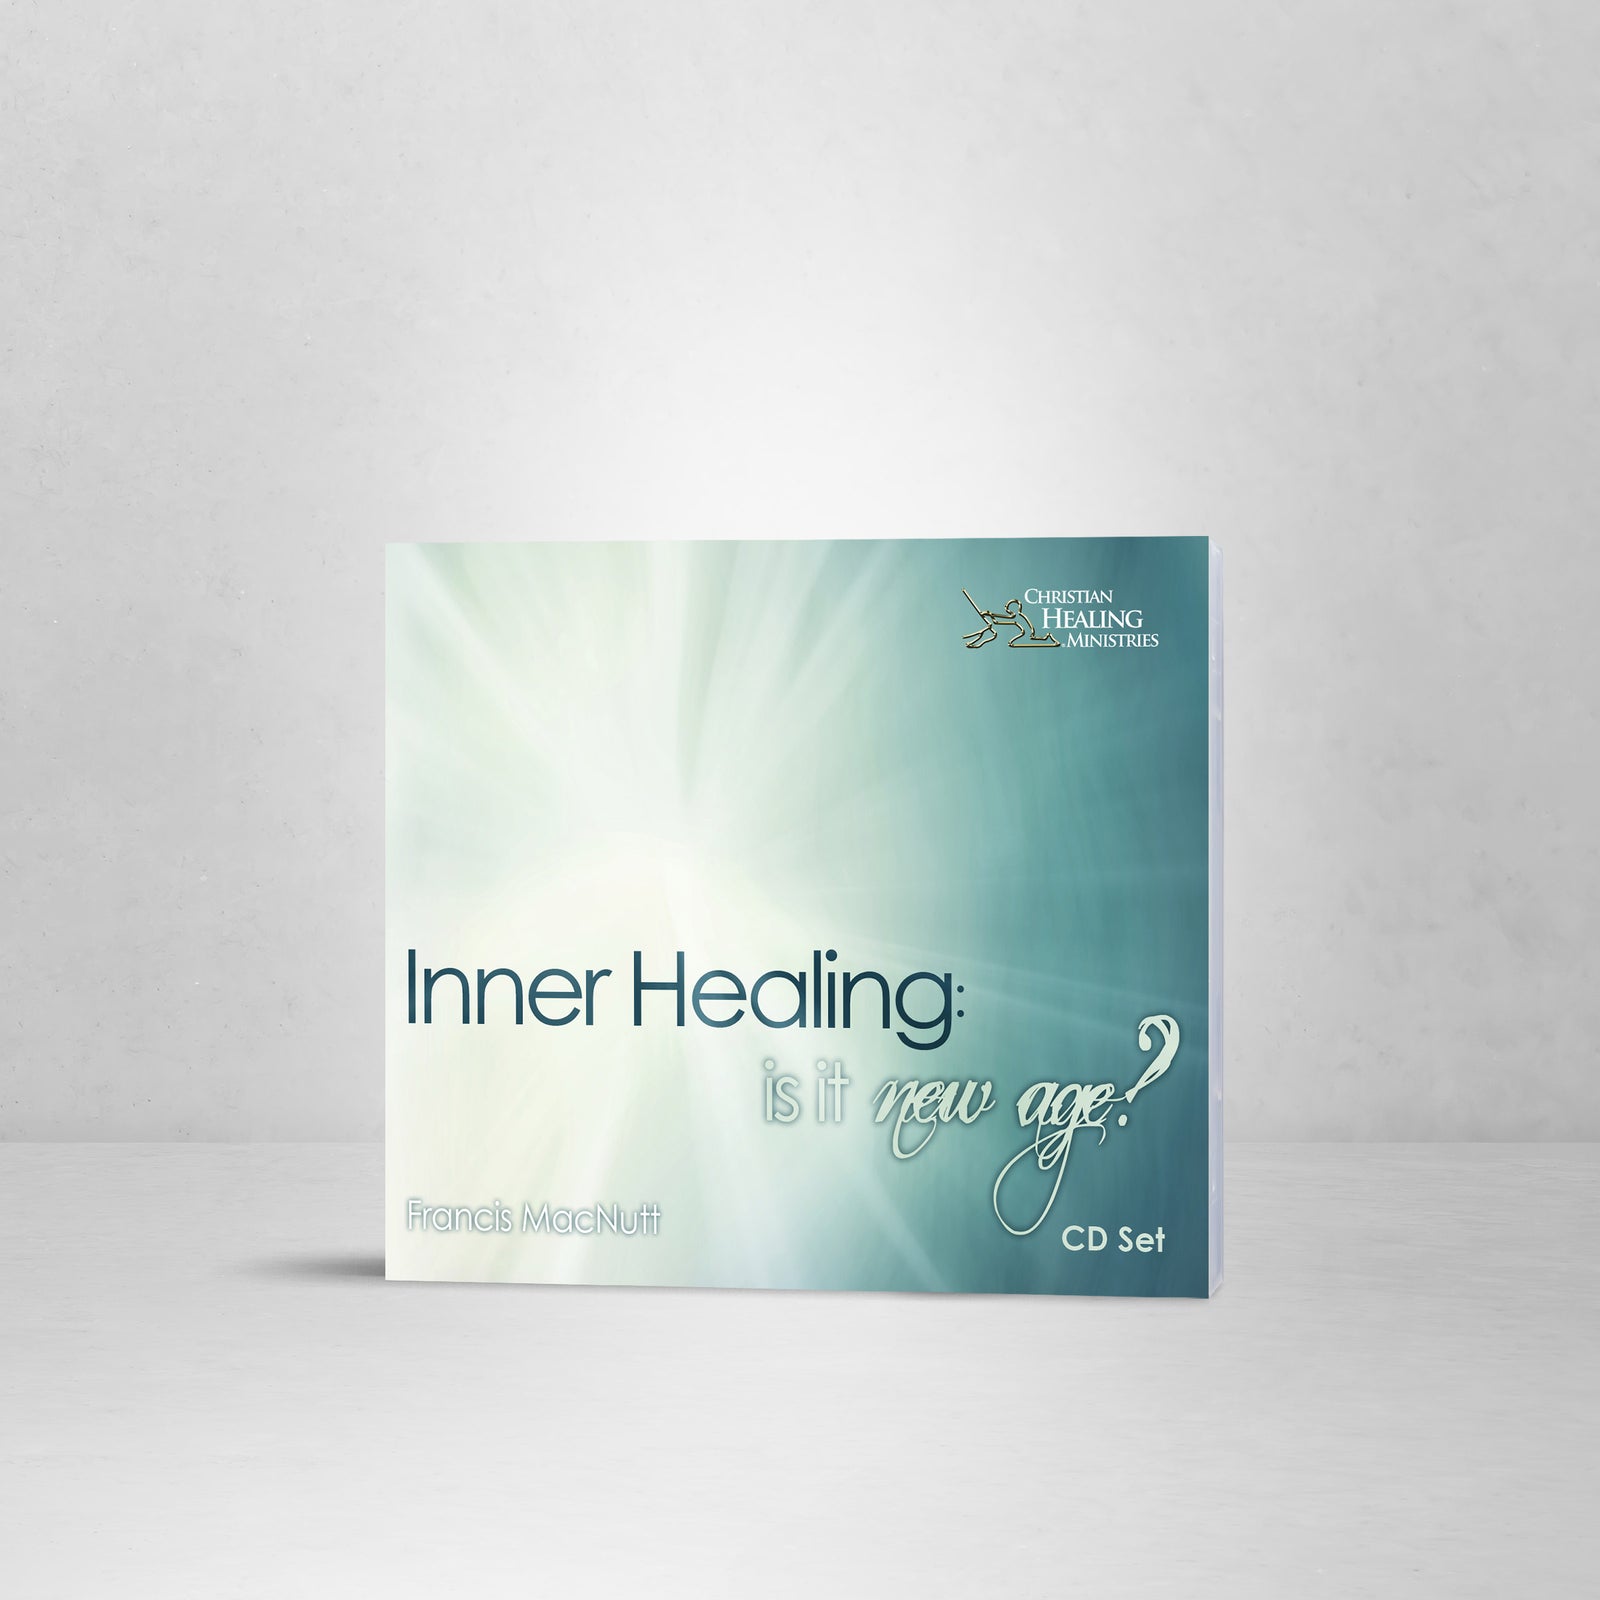 Inner Healing: Is It New Age? - CD Set